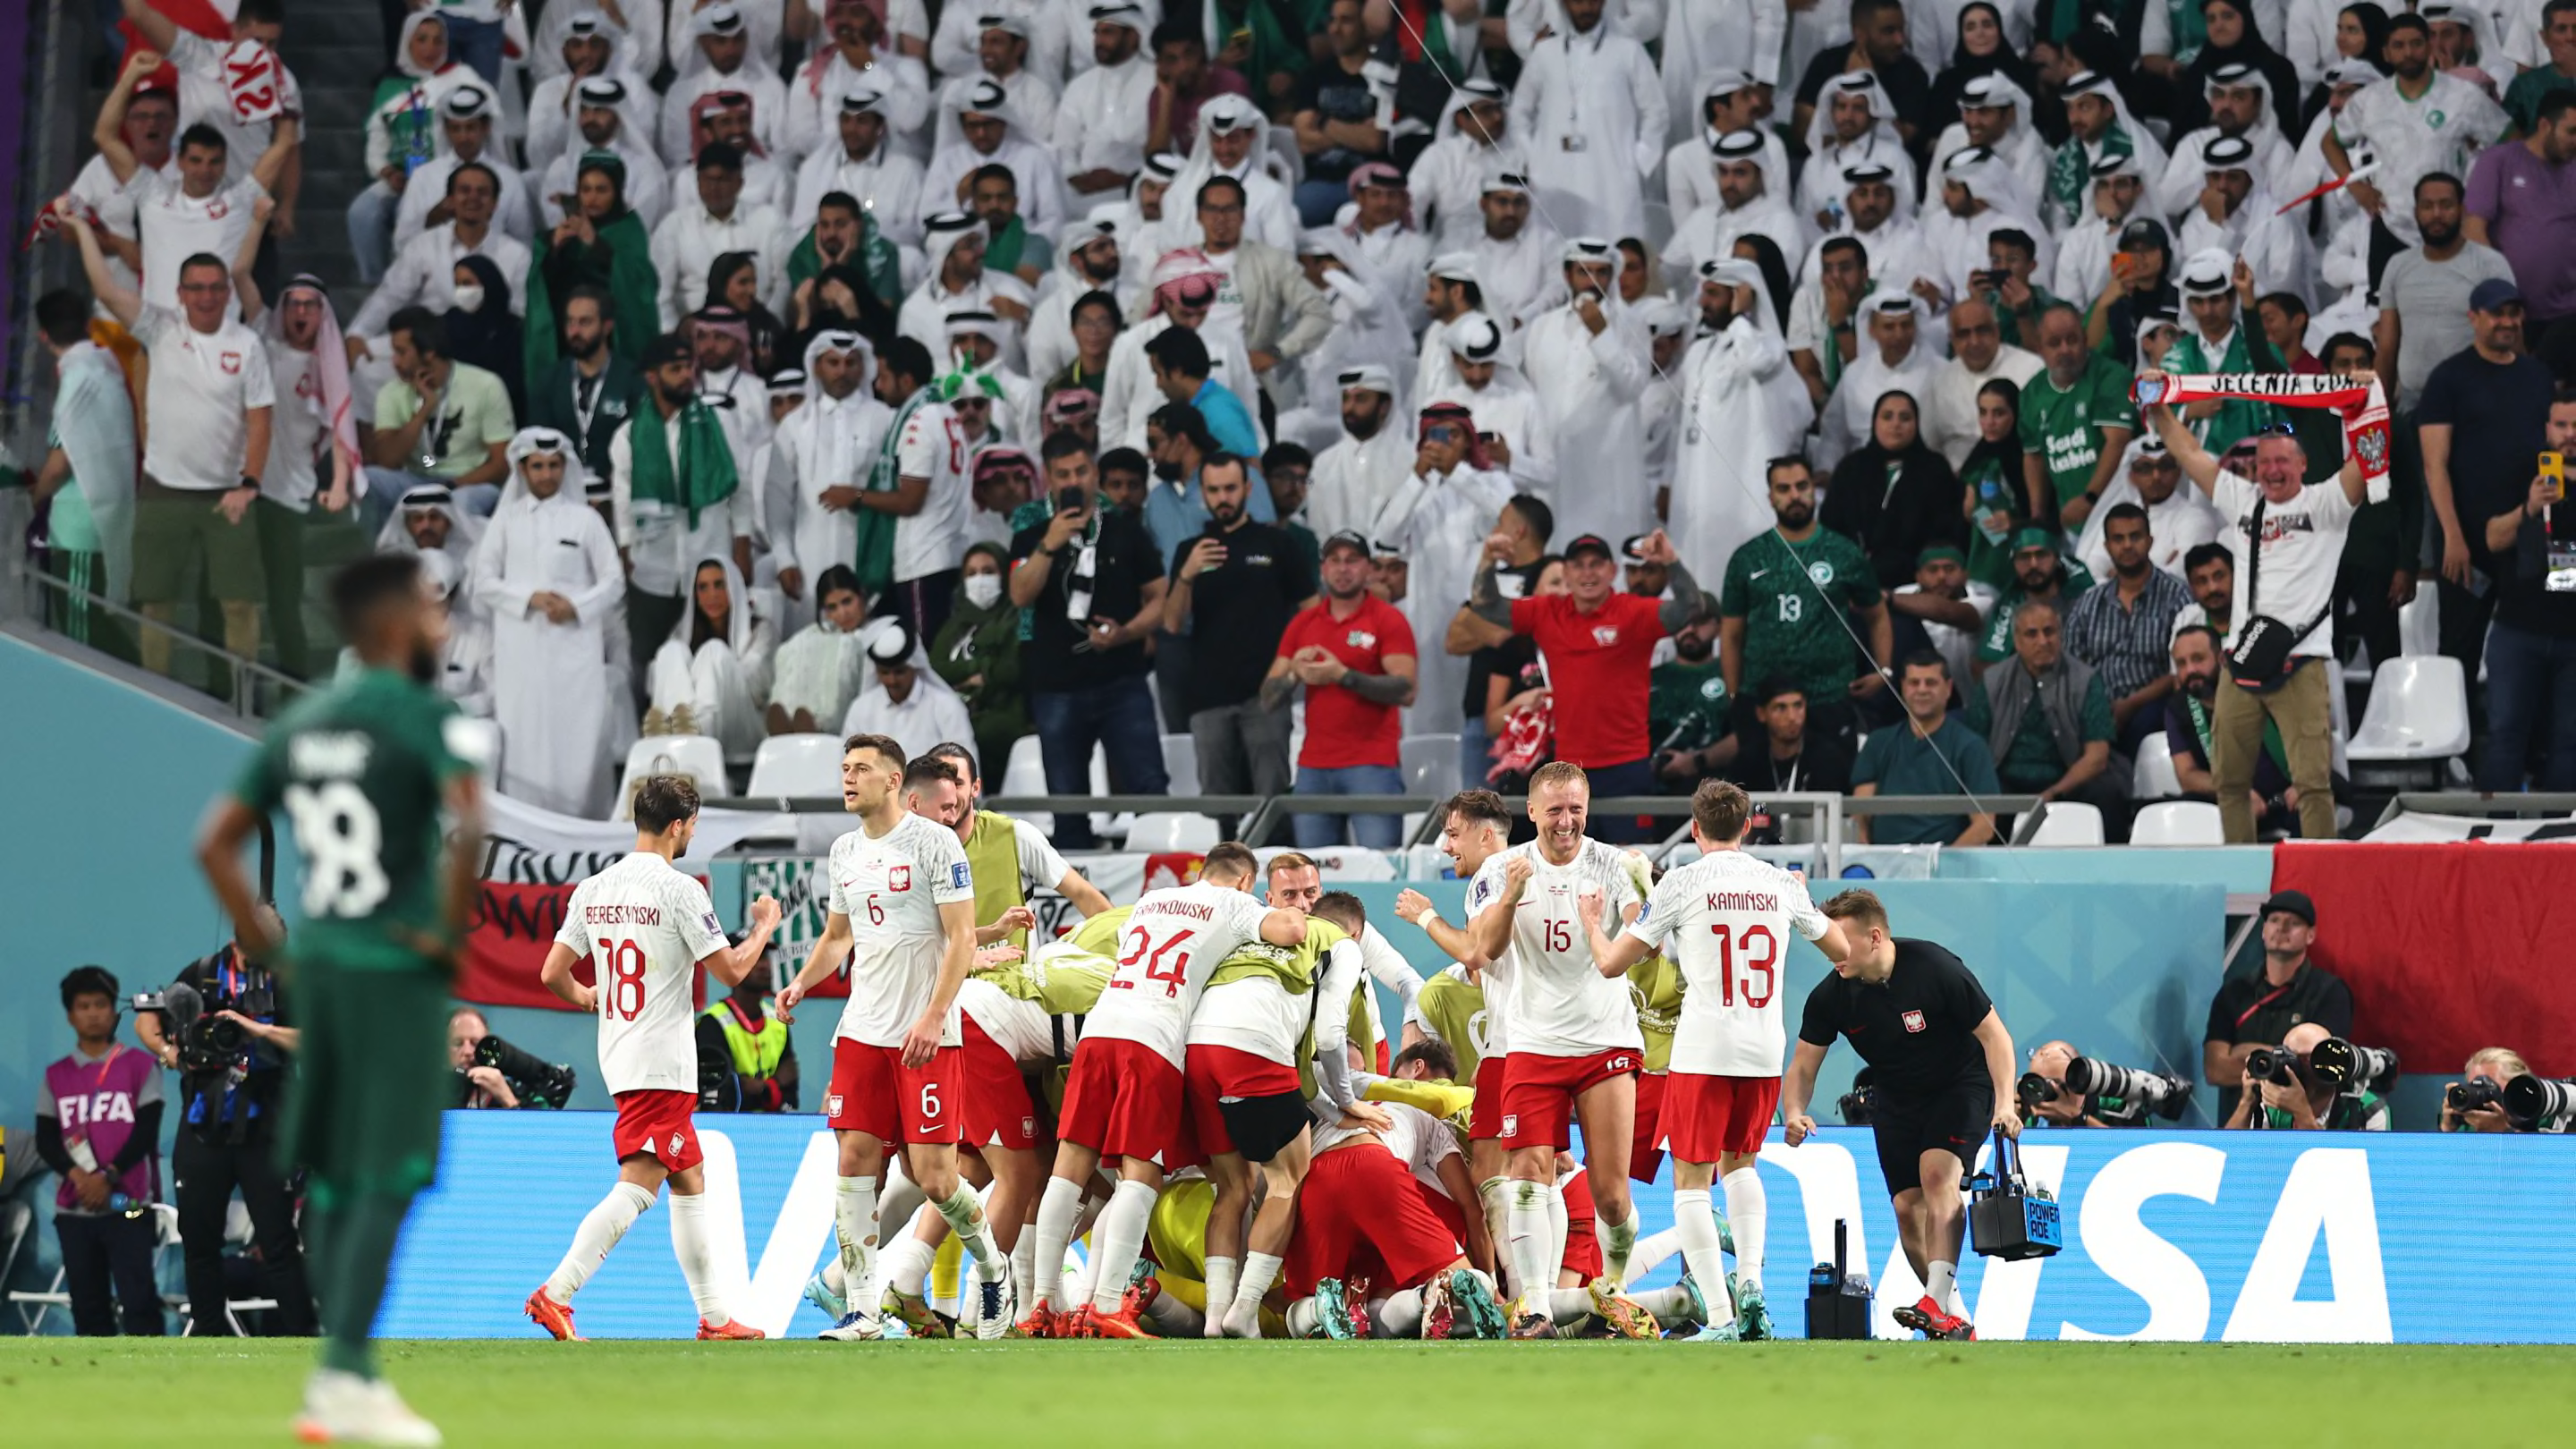 Poland 2-0 Saudi Arabia: Player ratings as Lewandowski scores first World Cup goal